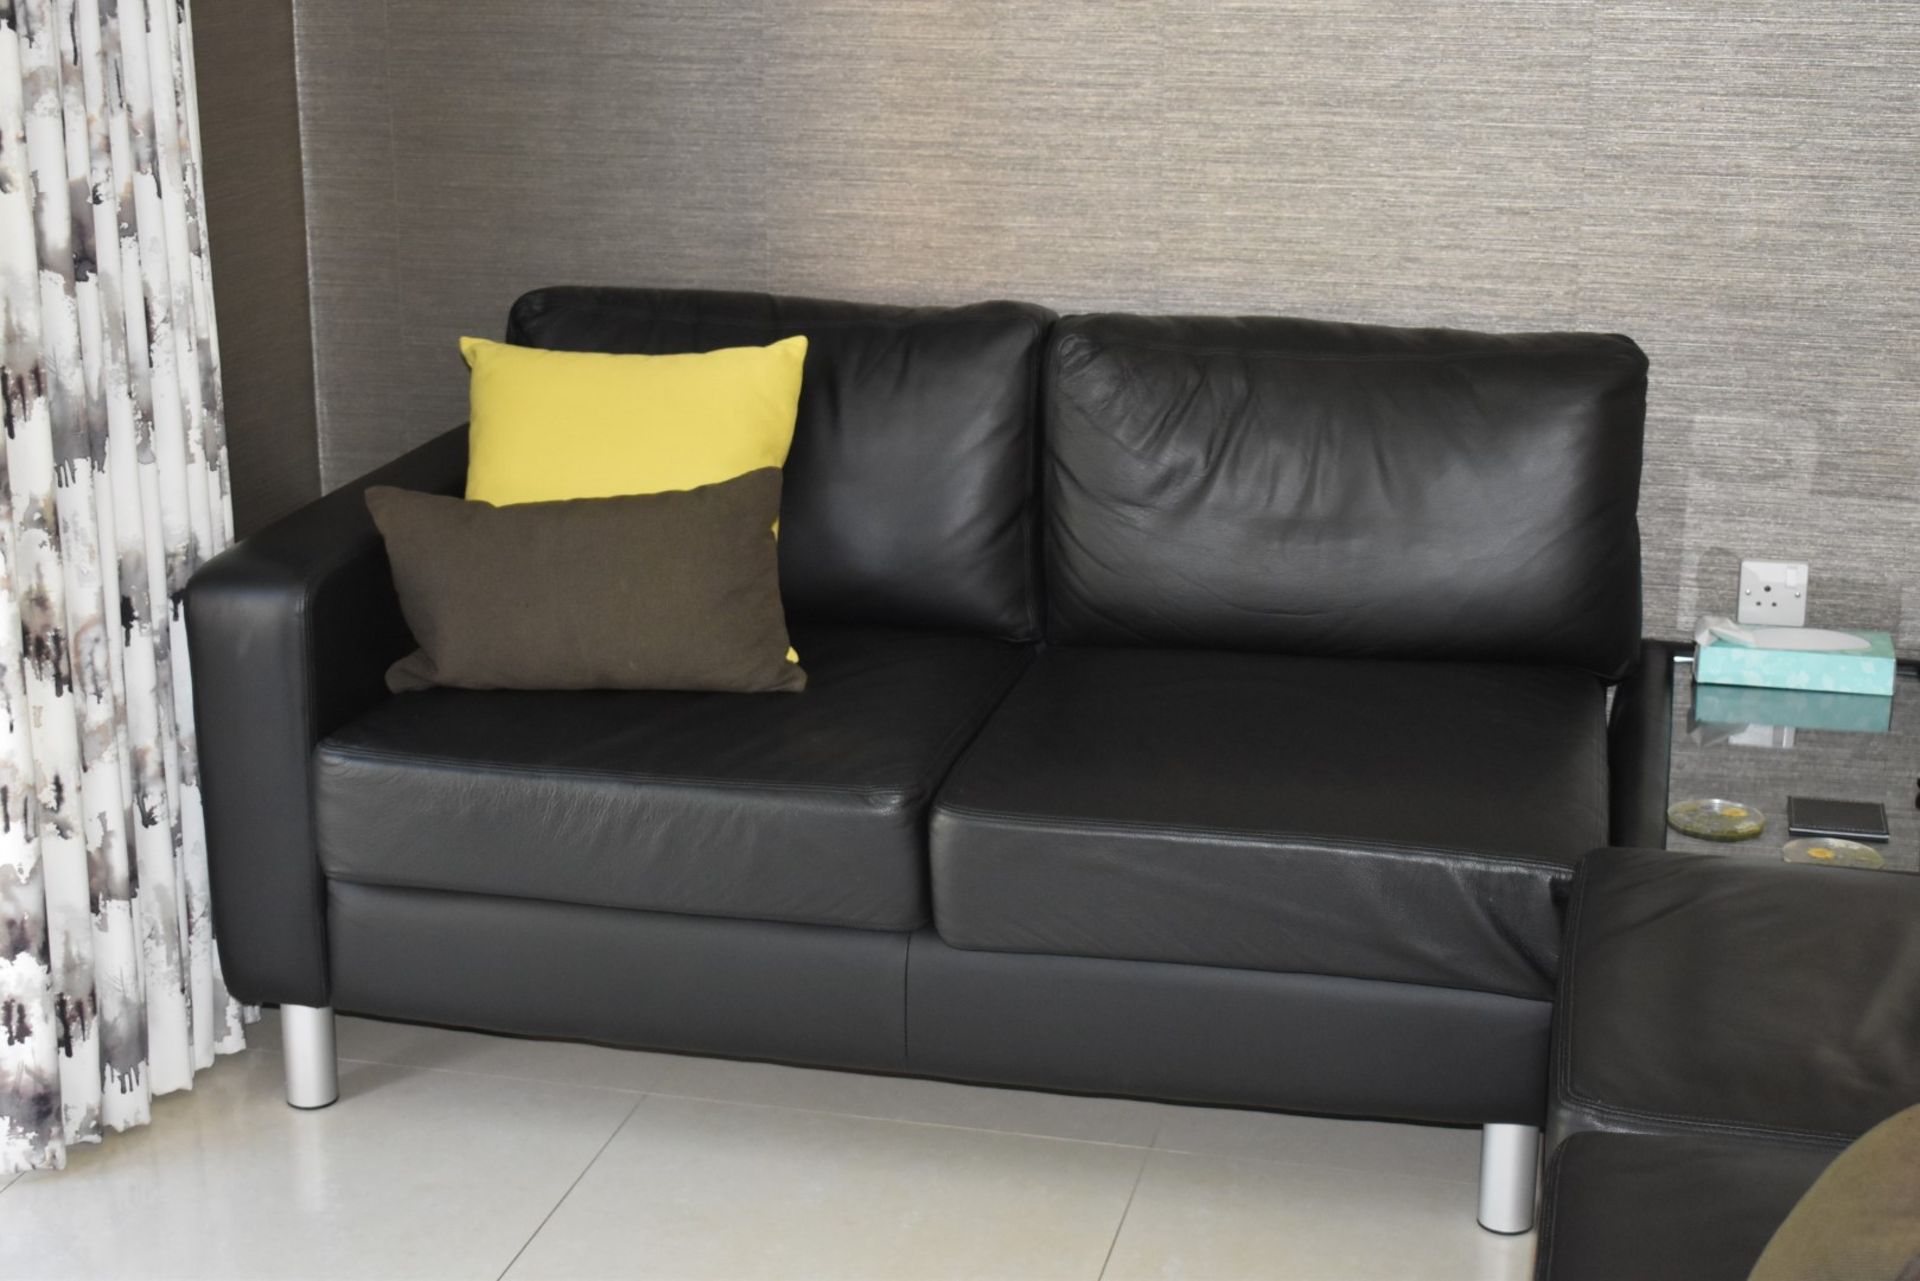 1 x Saxon Bespoke Corner Sofa Upholstered in Genuine Black Leather - Three-Piece Contemporary Design - Image 2 of 14